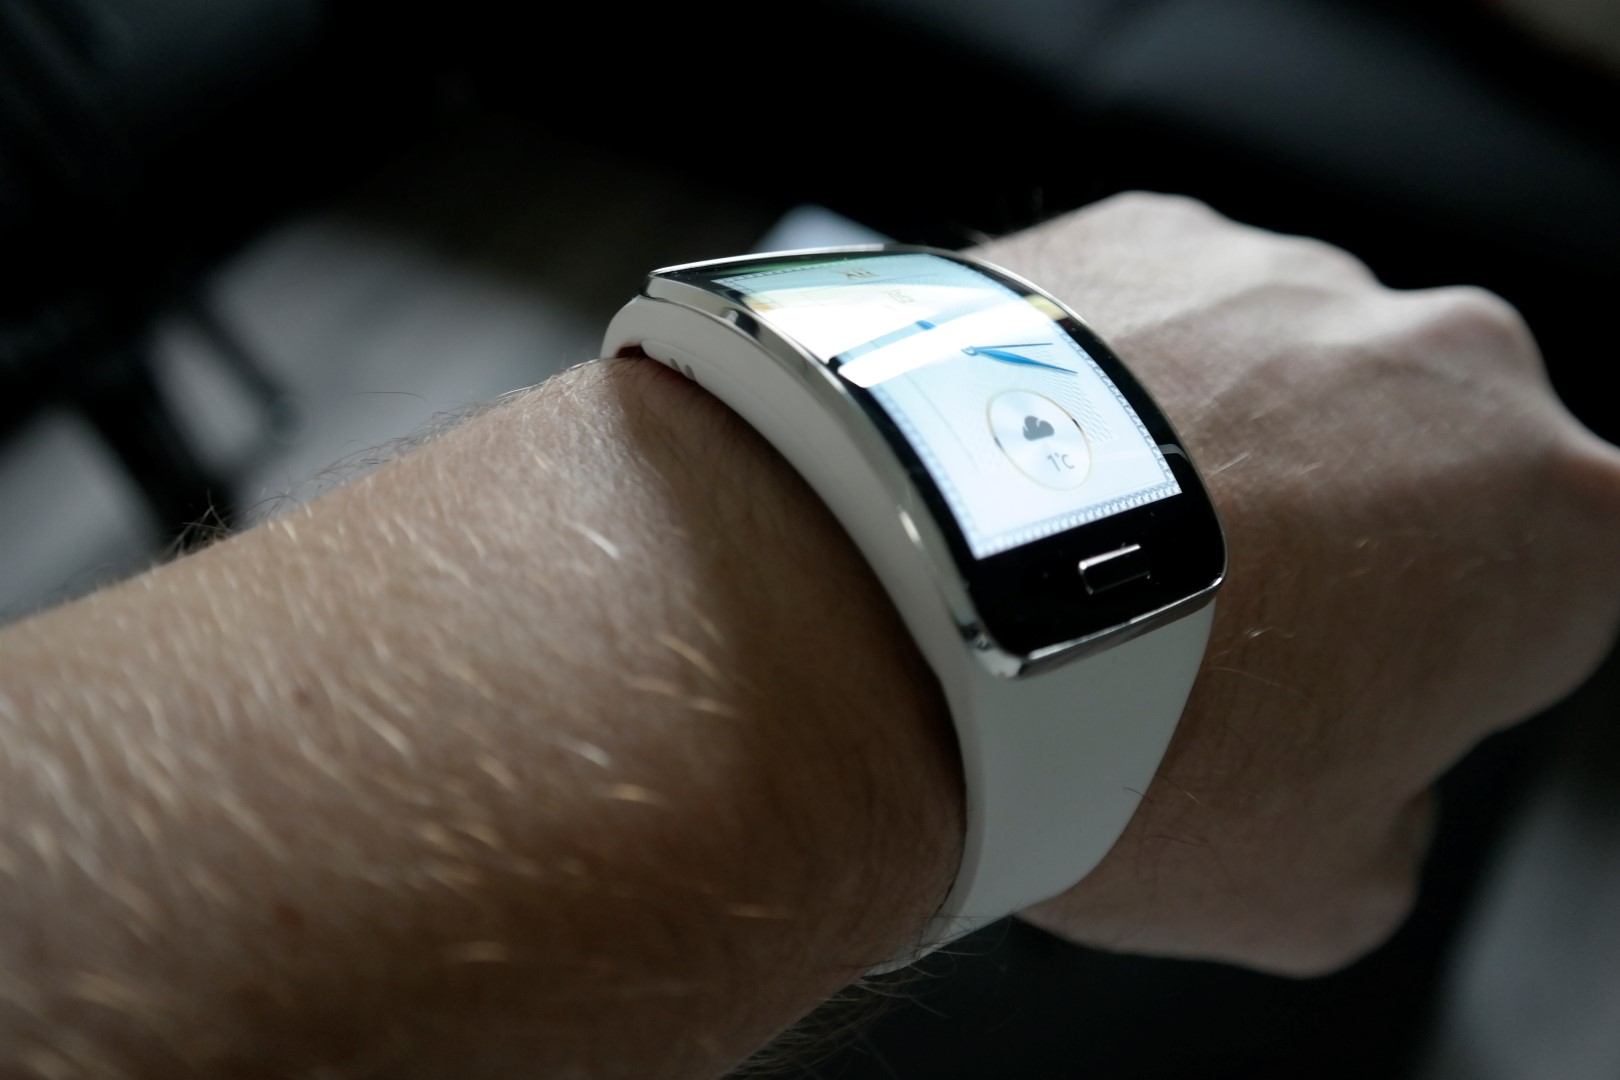 Samsung Smart Watch Gear S